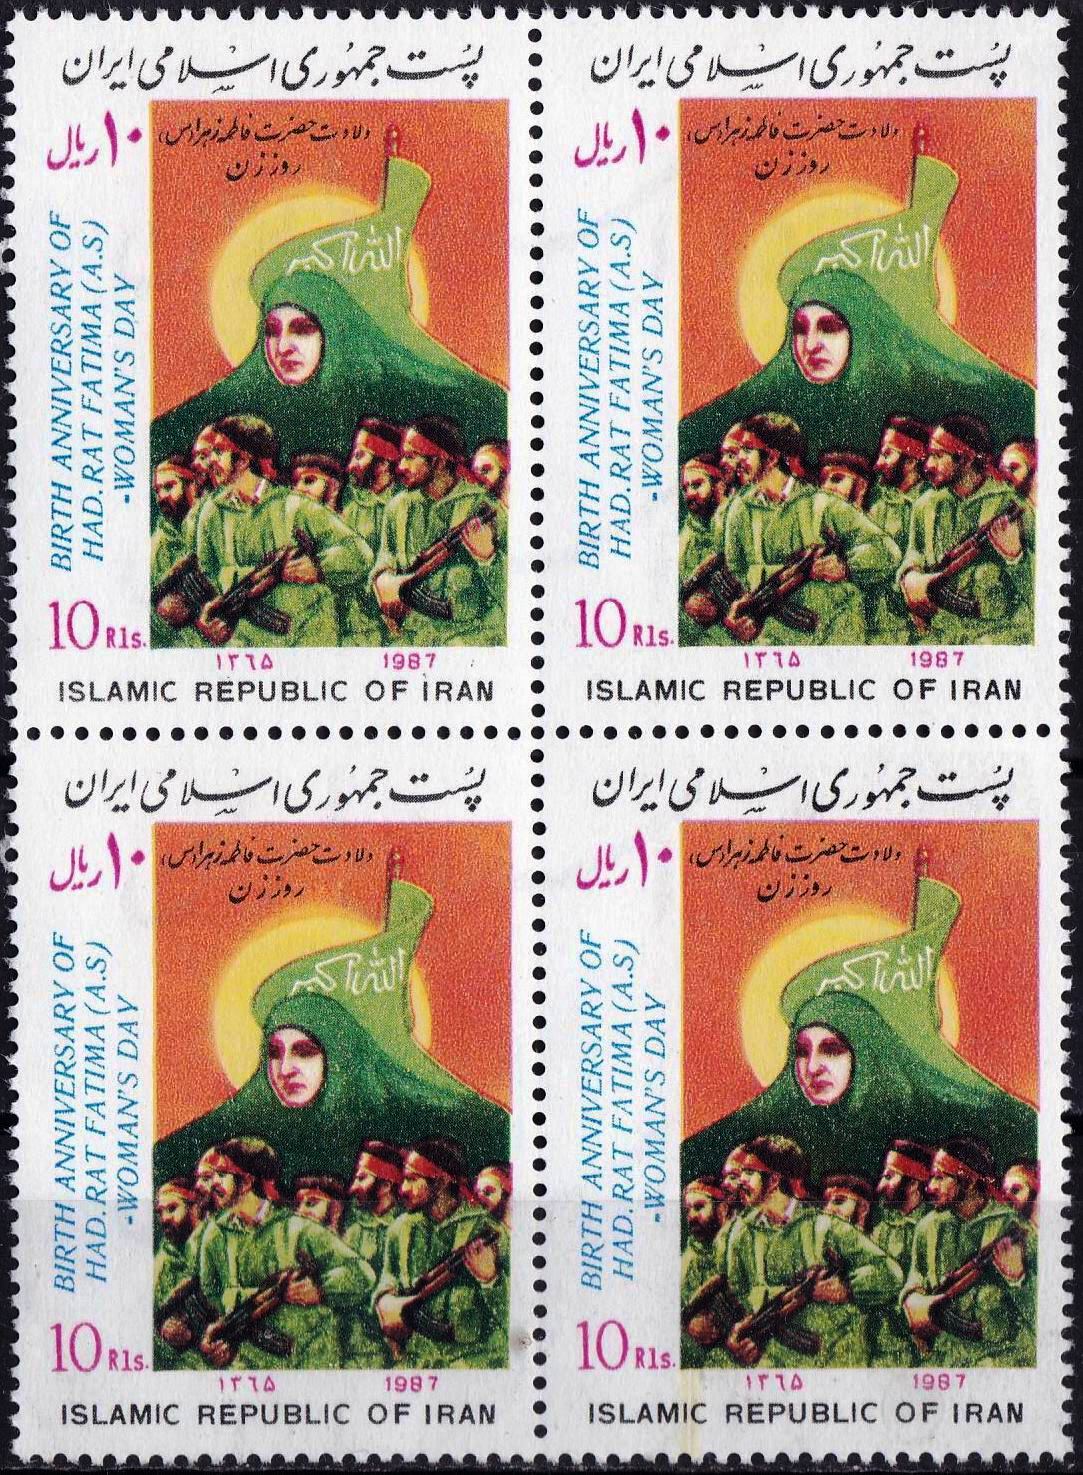 Iran 1965 Stamps State Visit by Saudi Arabia's King Faisal Reza - Click Image to Close